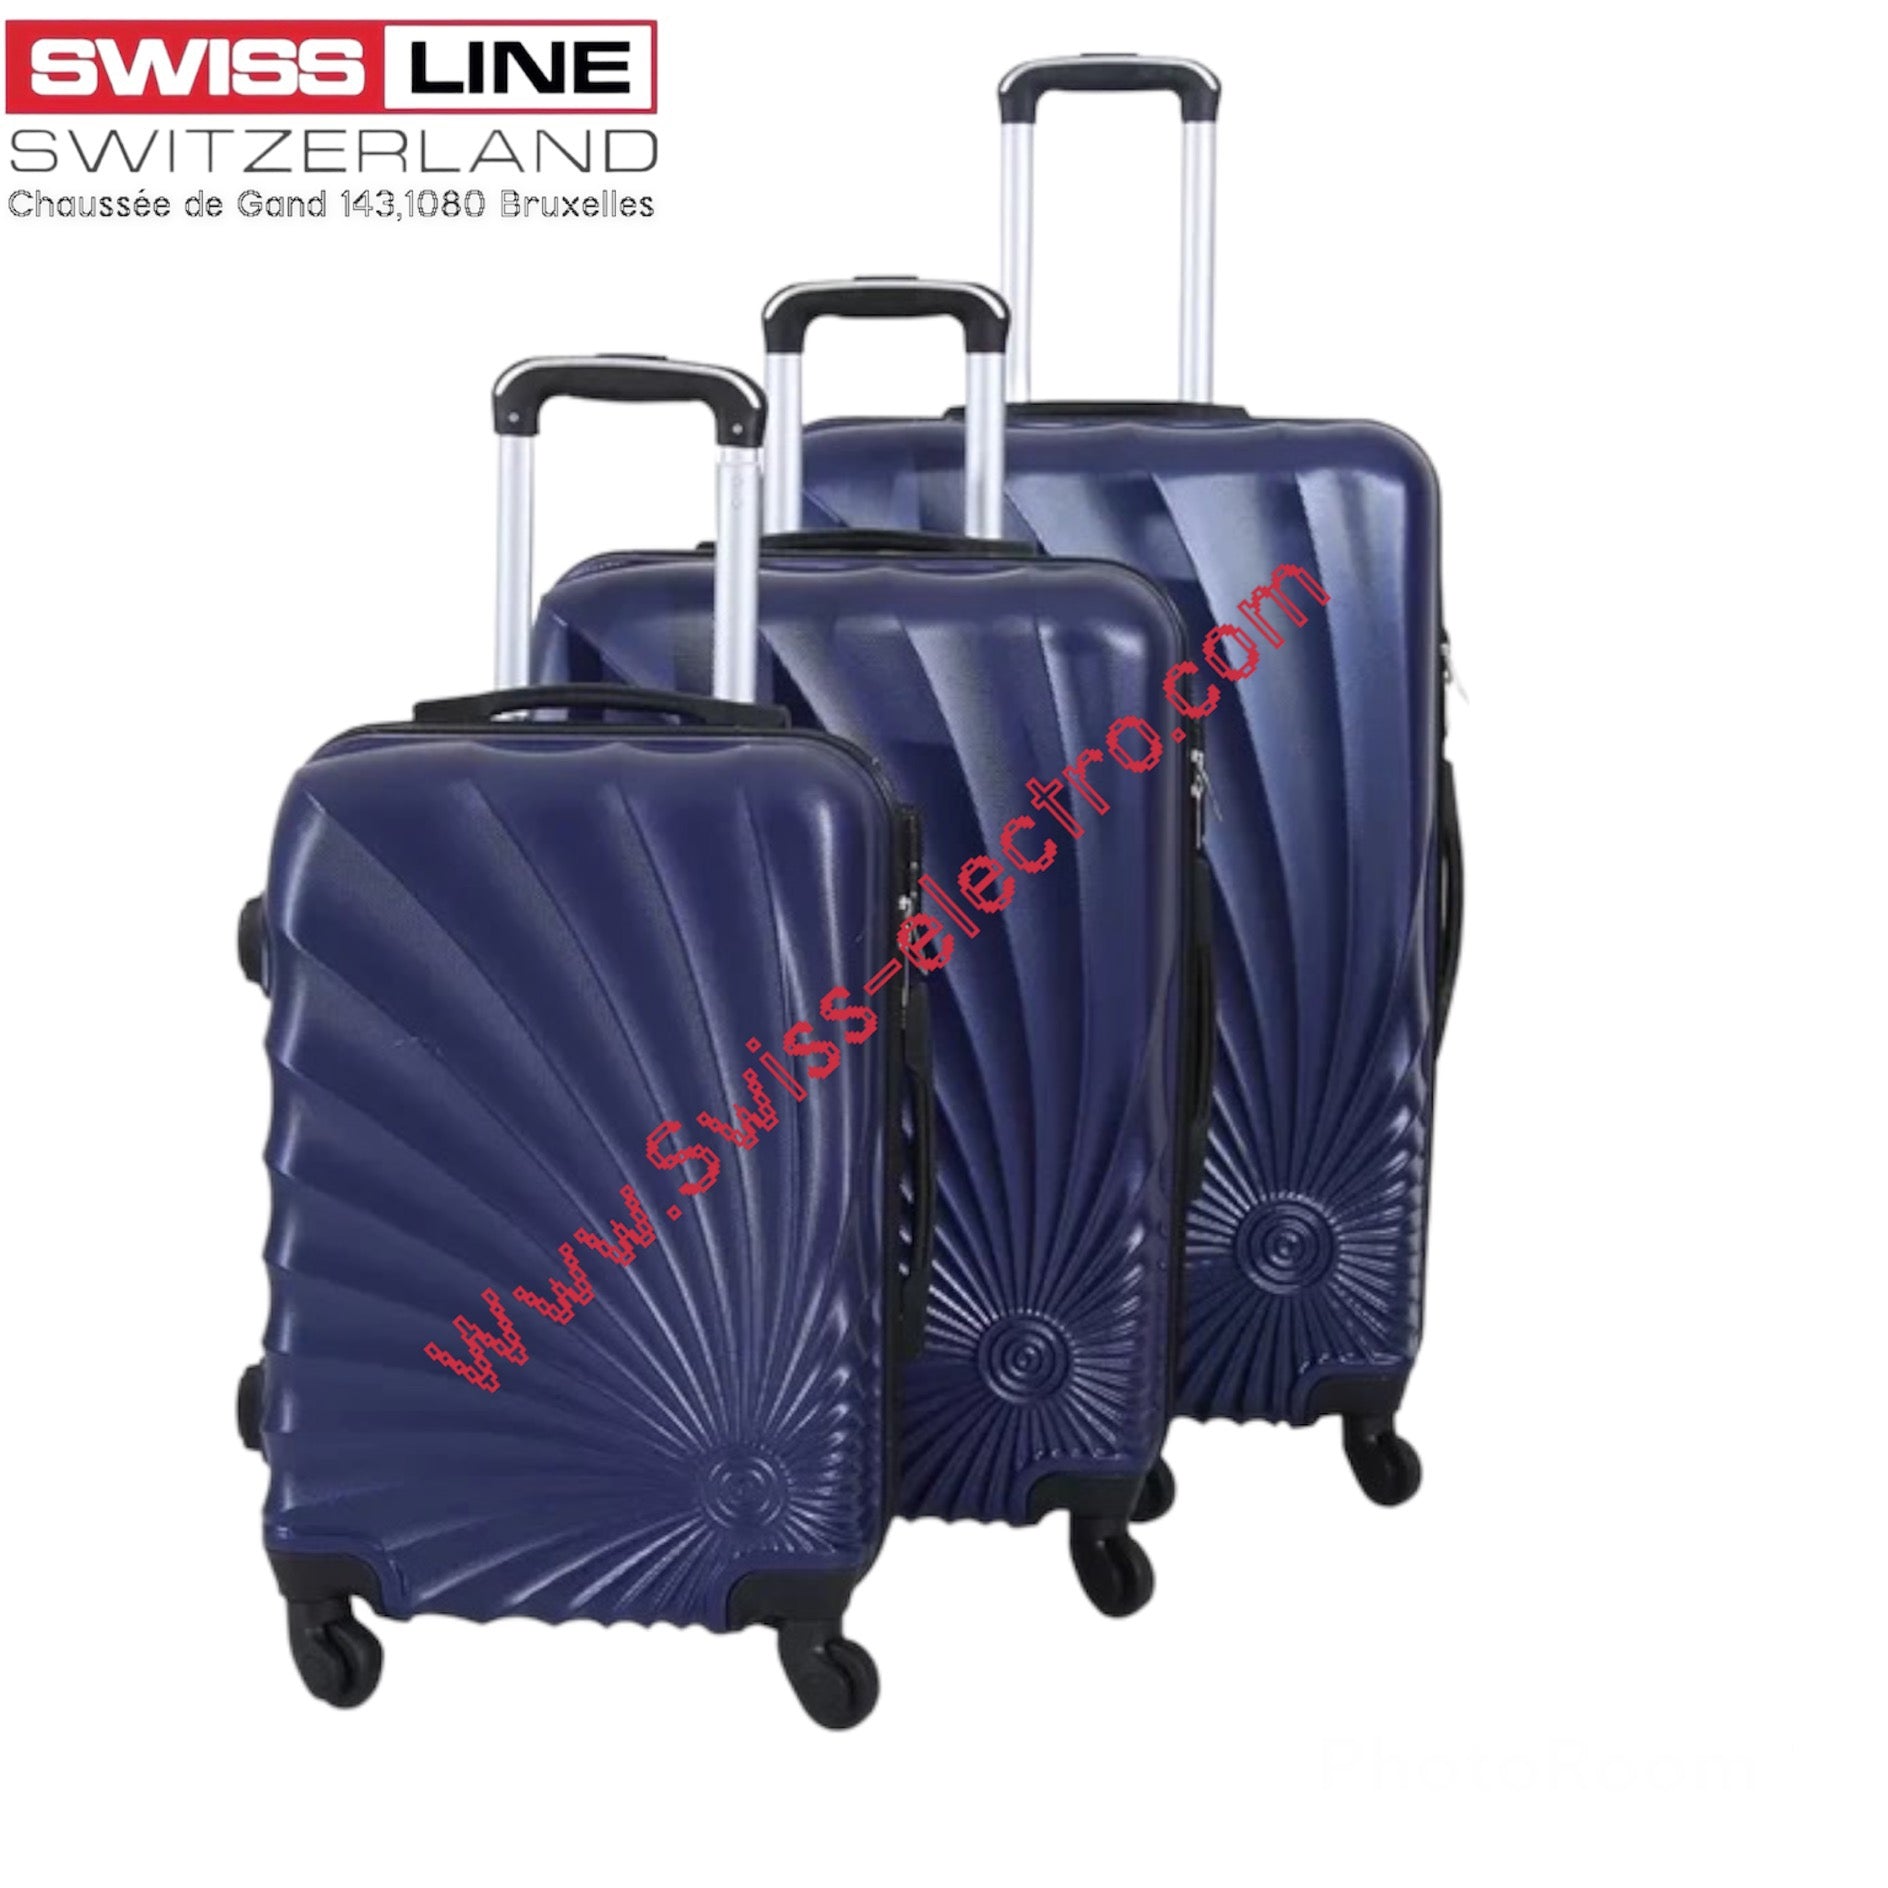 3-piece travel suitcase set